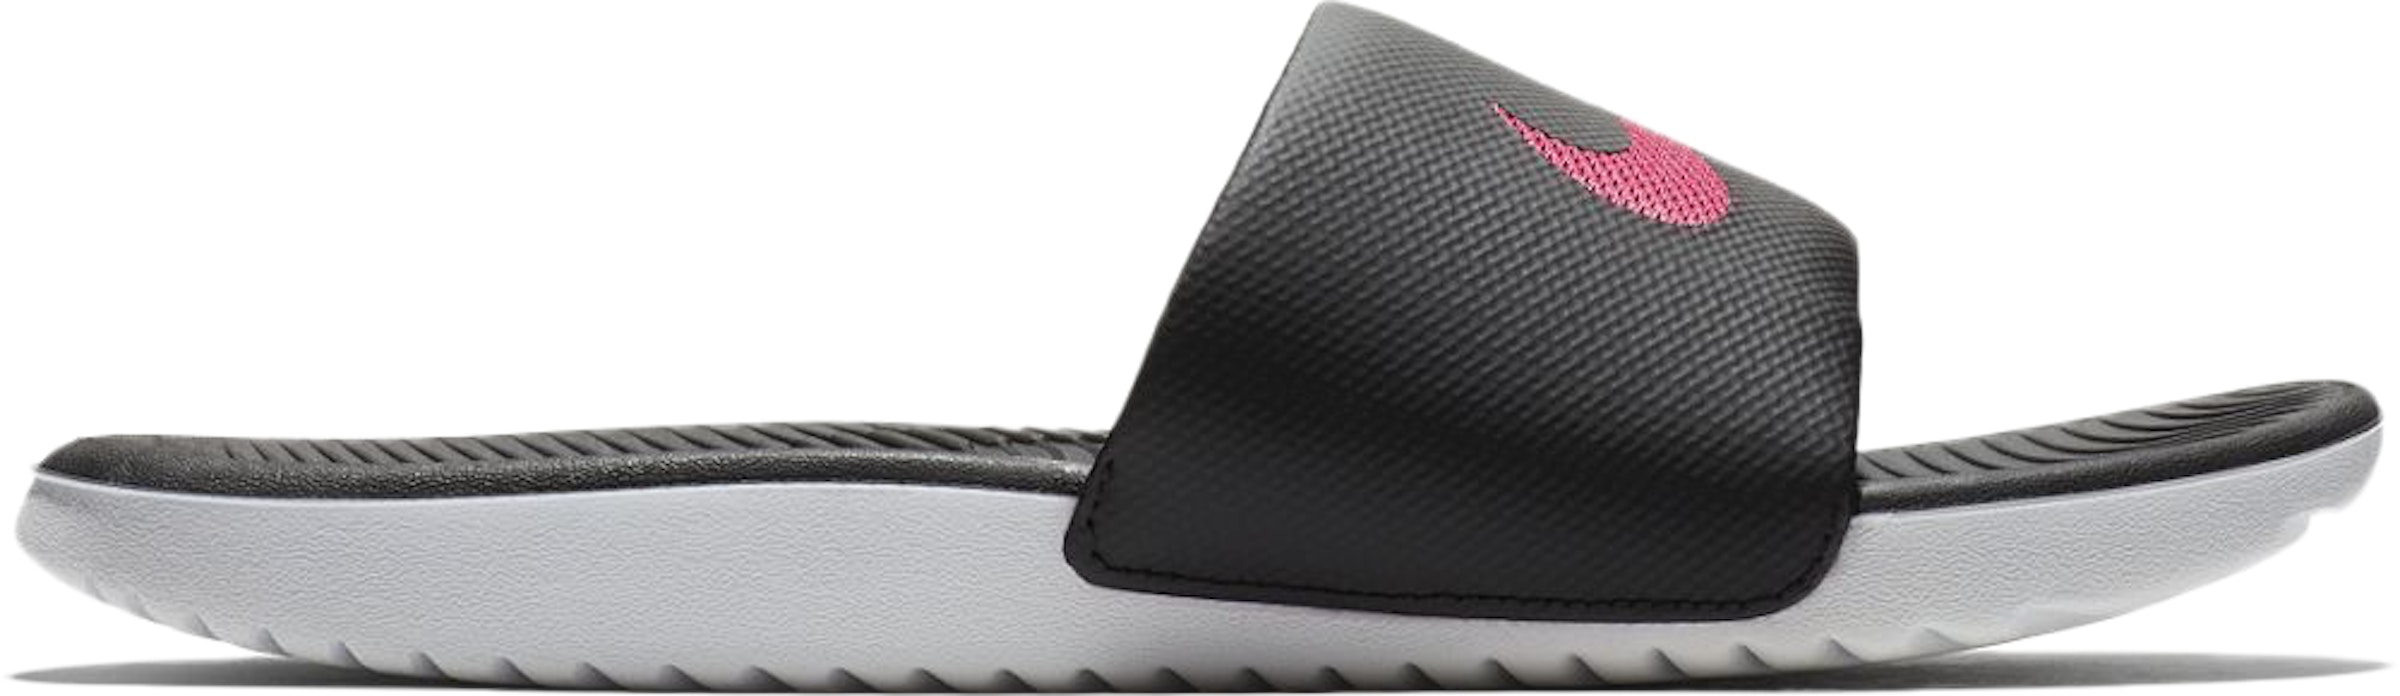 Nike Kawa Slide Black Vivid Pink (Women's) - 834588-060 US